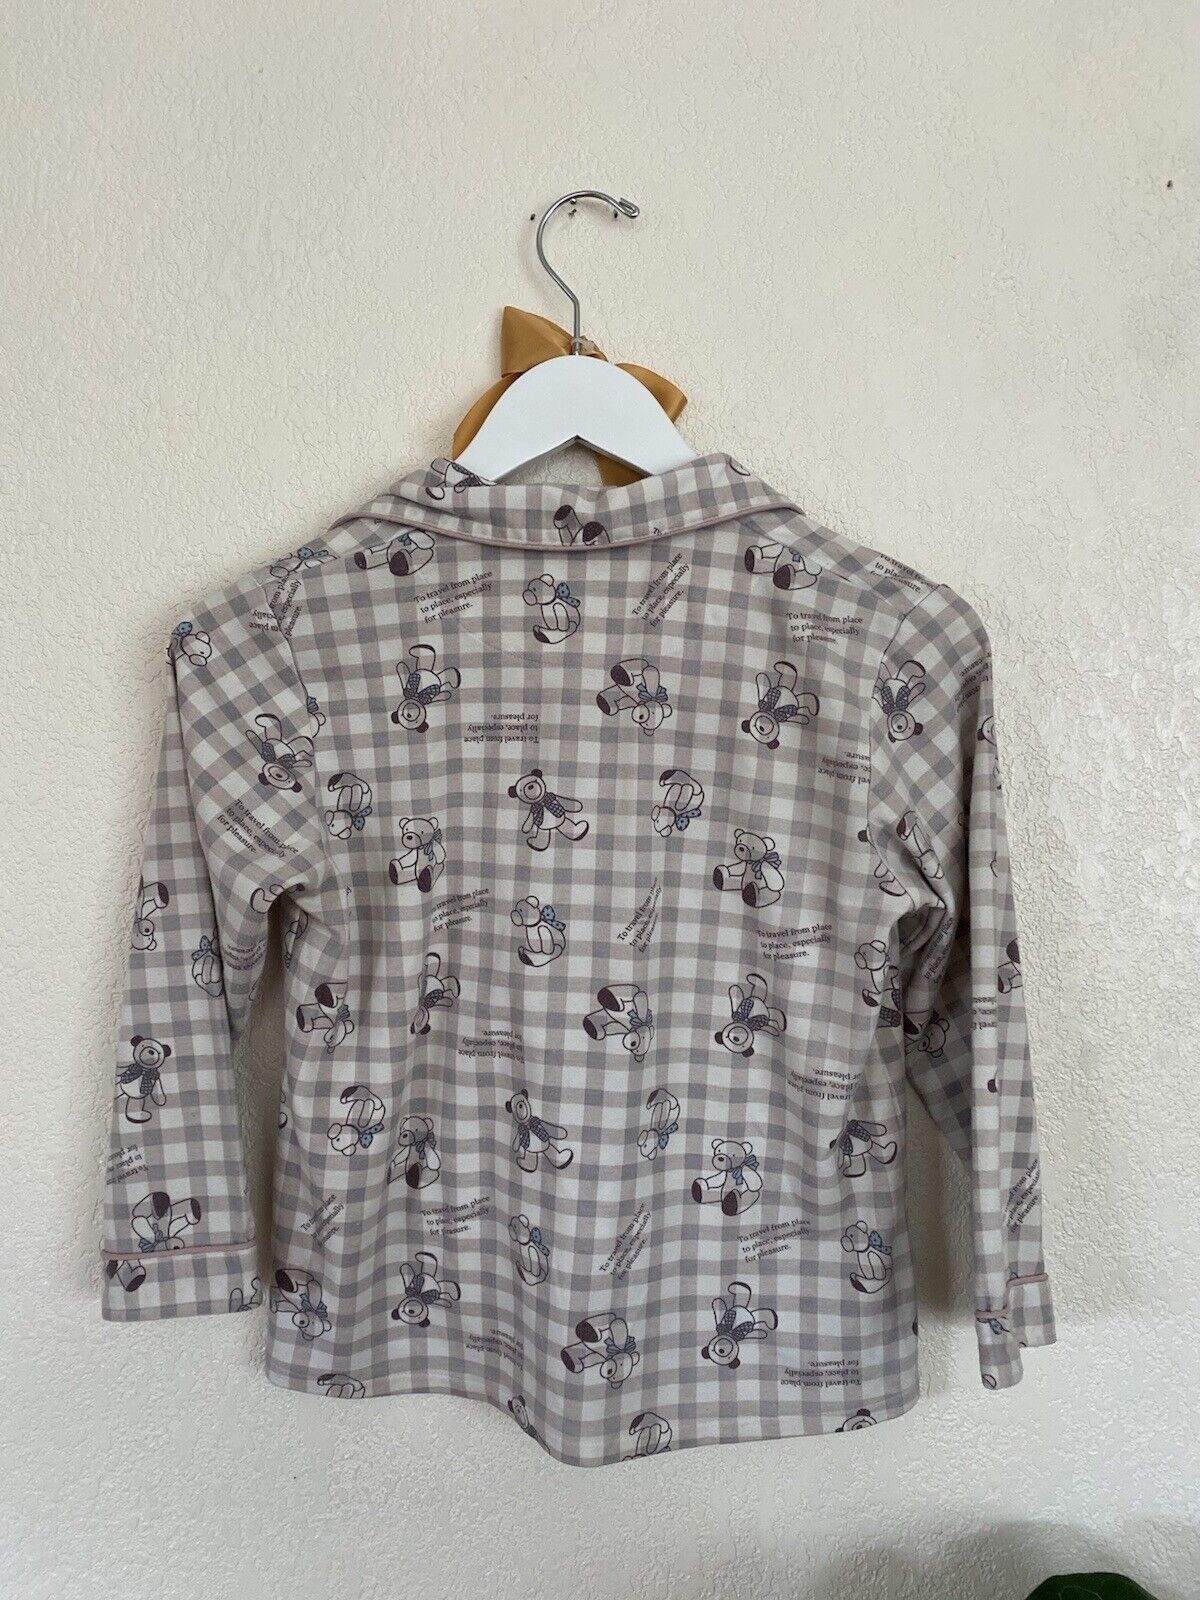 Vintage Teddy Bear Flannel Button Down Shirt - She’s- Women’s XS